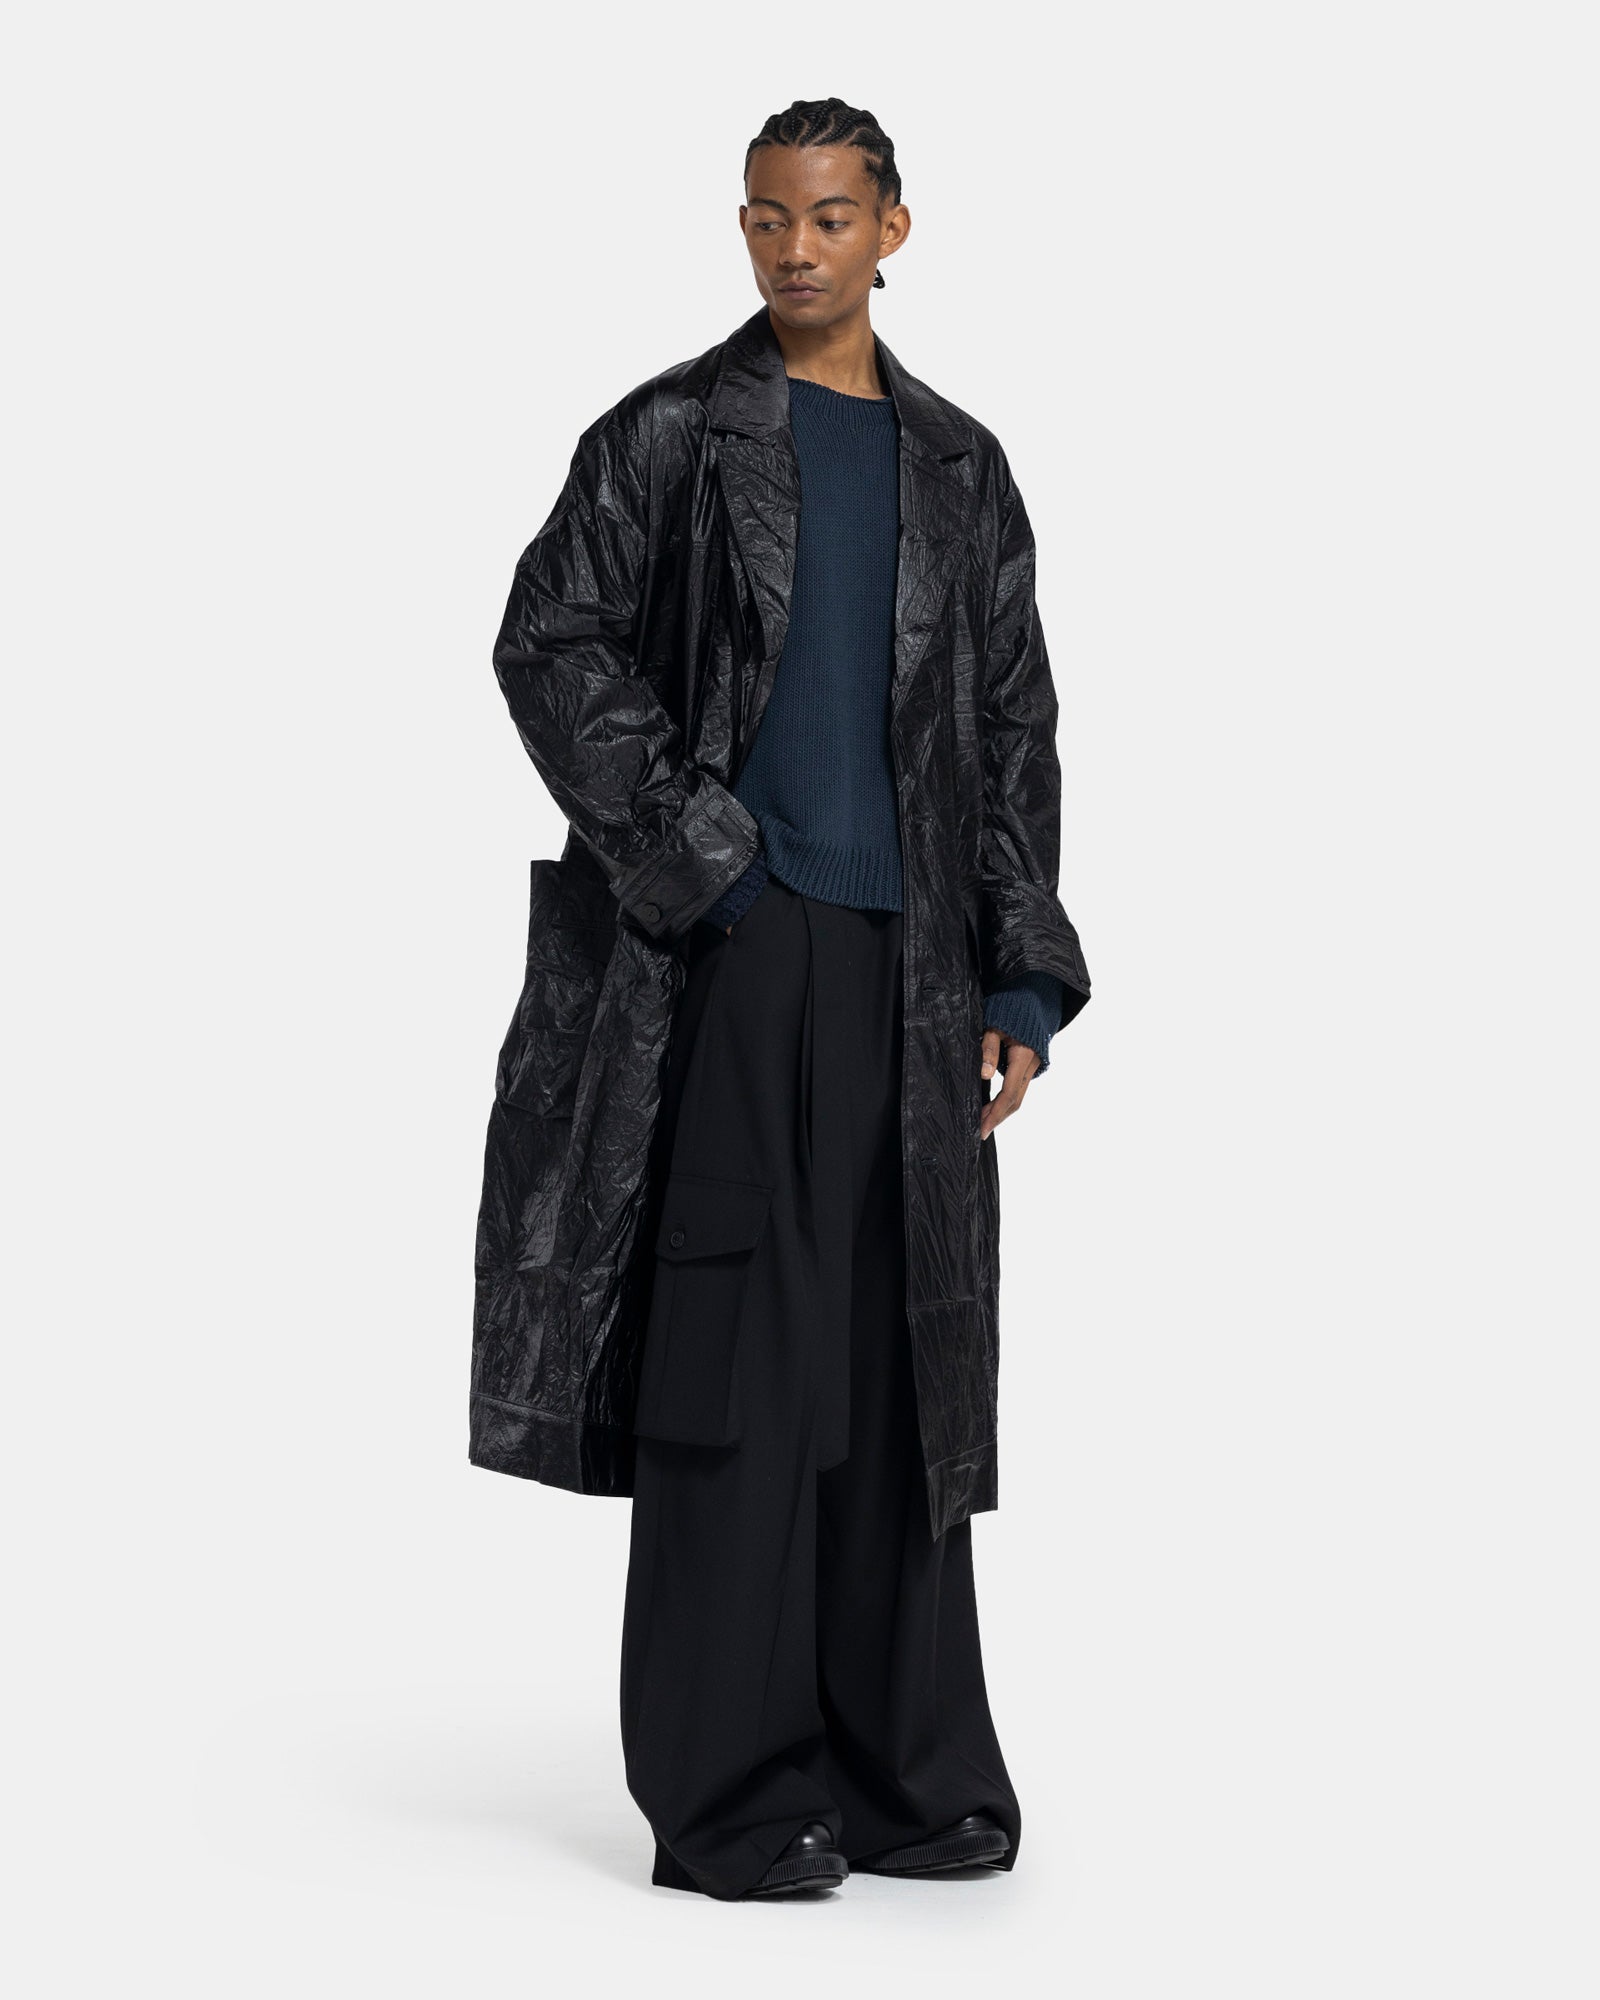 Male model wearing ECKHAUS LATTA black crinkle trench on white background